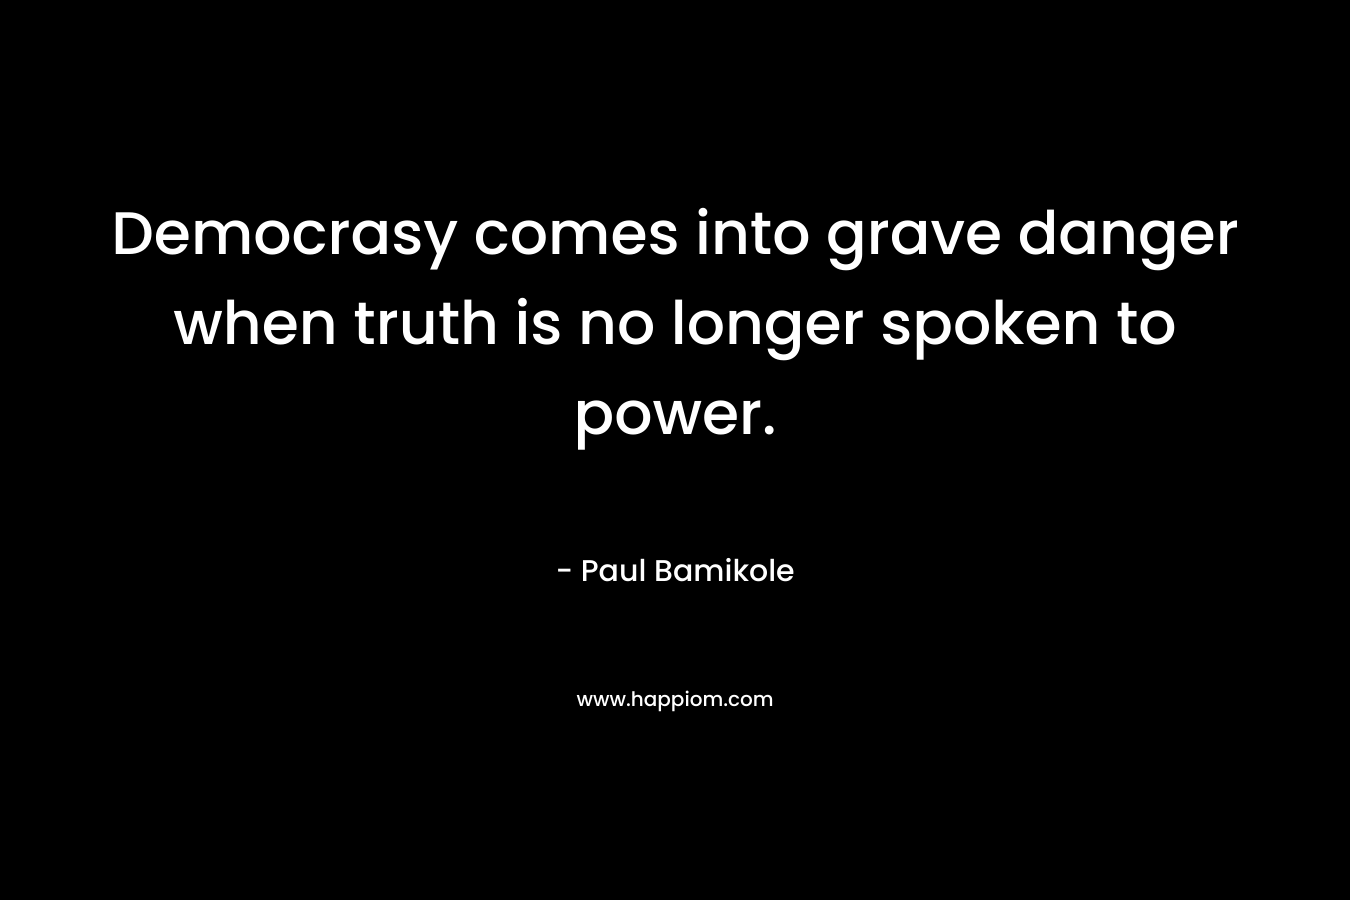 Democrasy comes into grave danger when truth is no longer spoken to power.